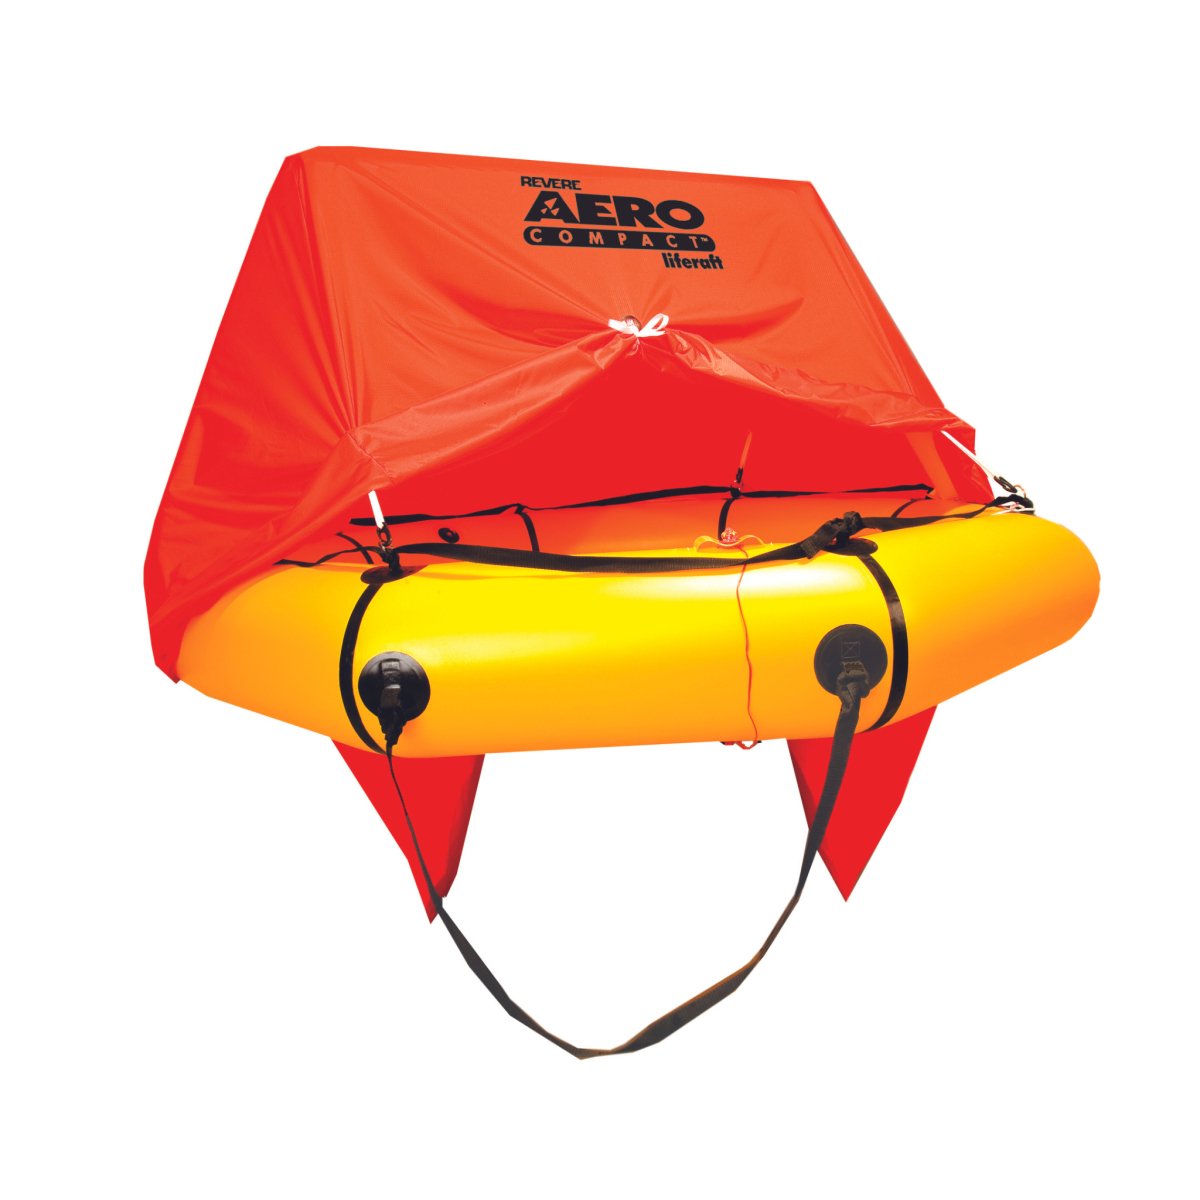 Revere Aero Compact Aviation Life Raft, 2-4 Person, Valise Bag - Life Raft Professionals